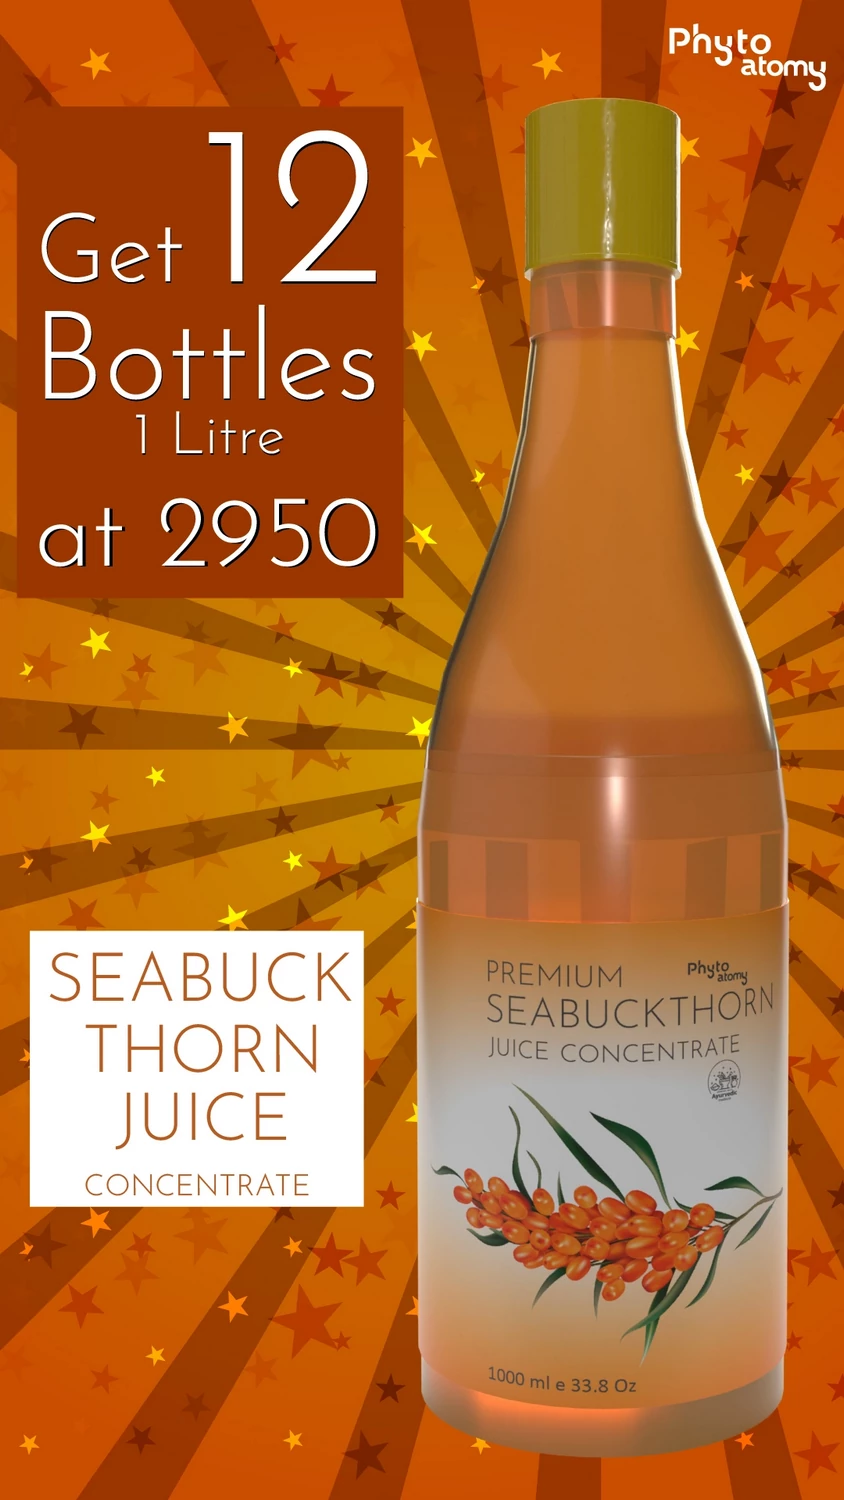 RBV B2B Seabuckthorn Juice Concentrate 1Ltr. (12 Bottle)